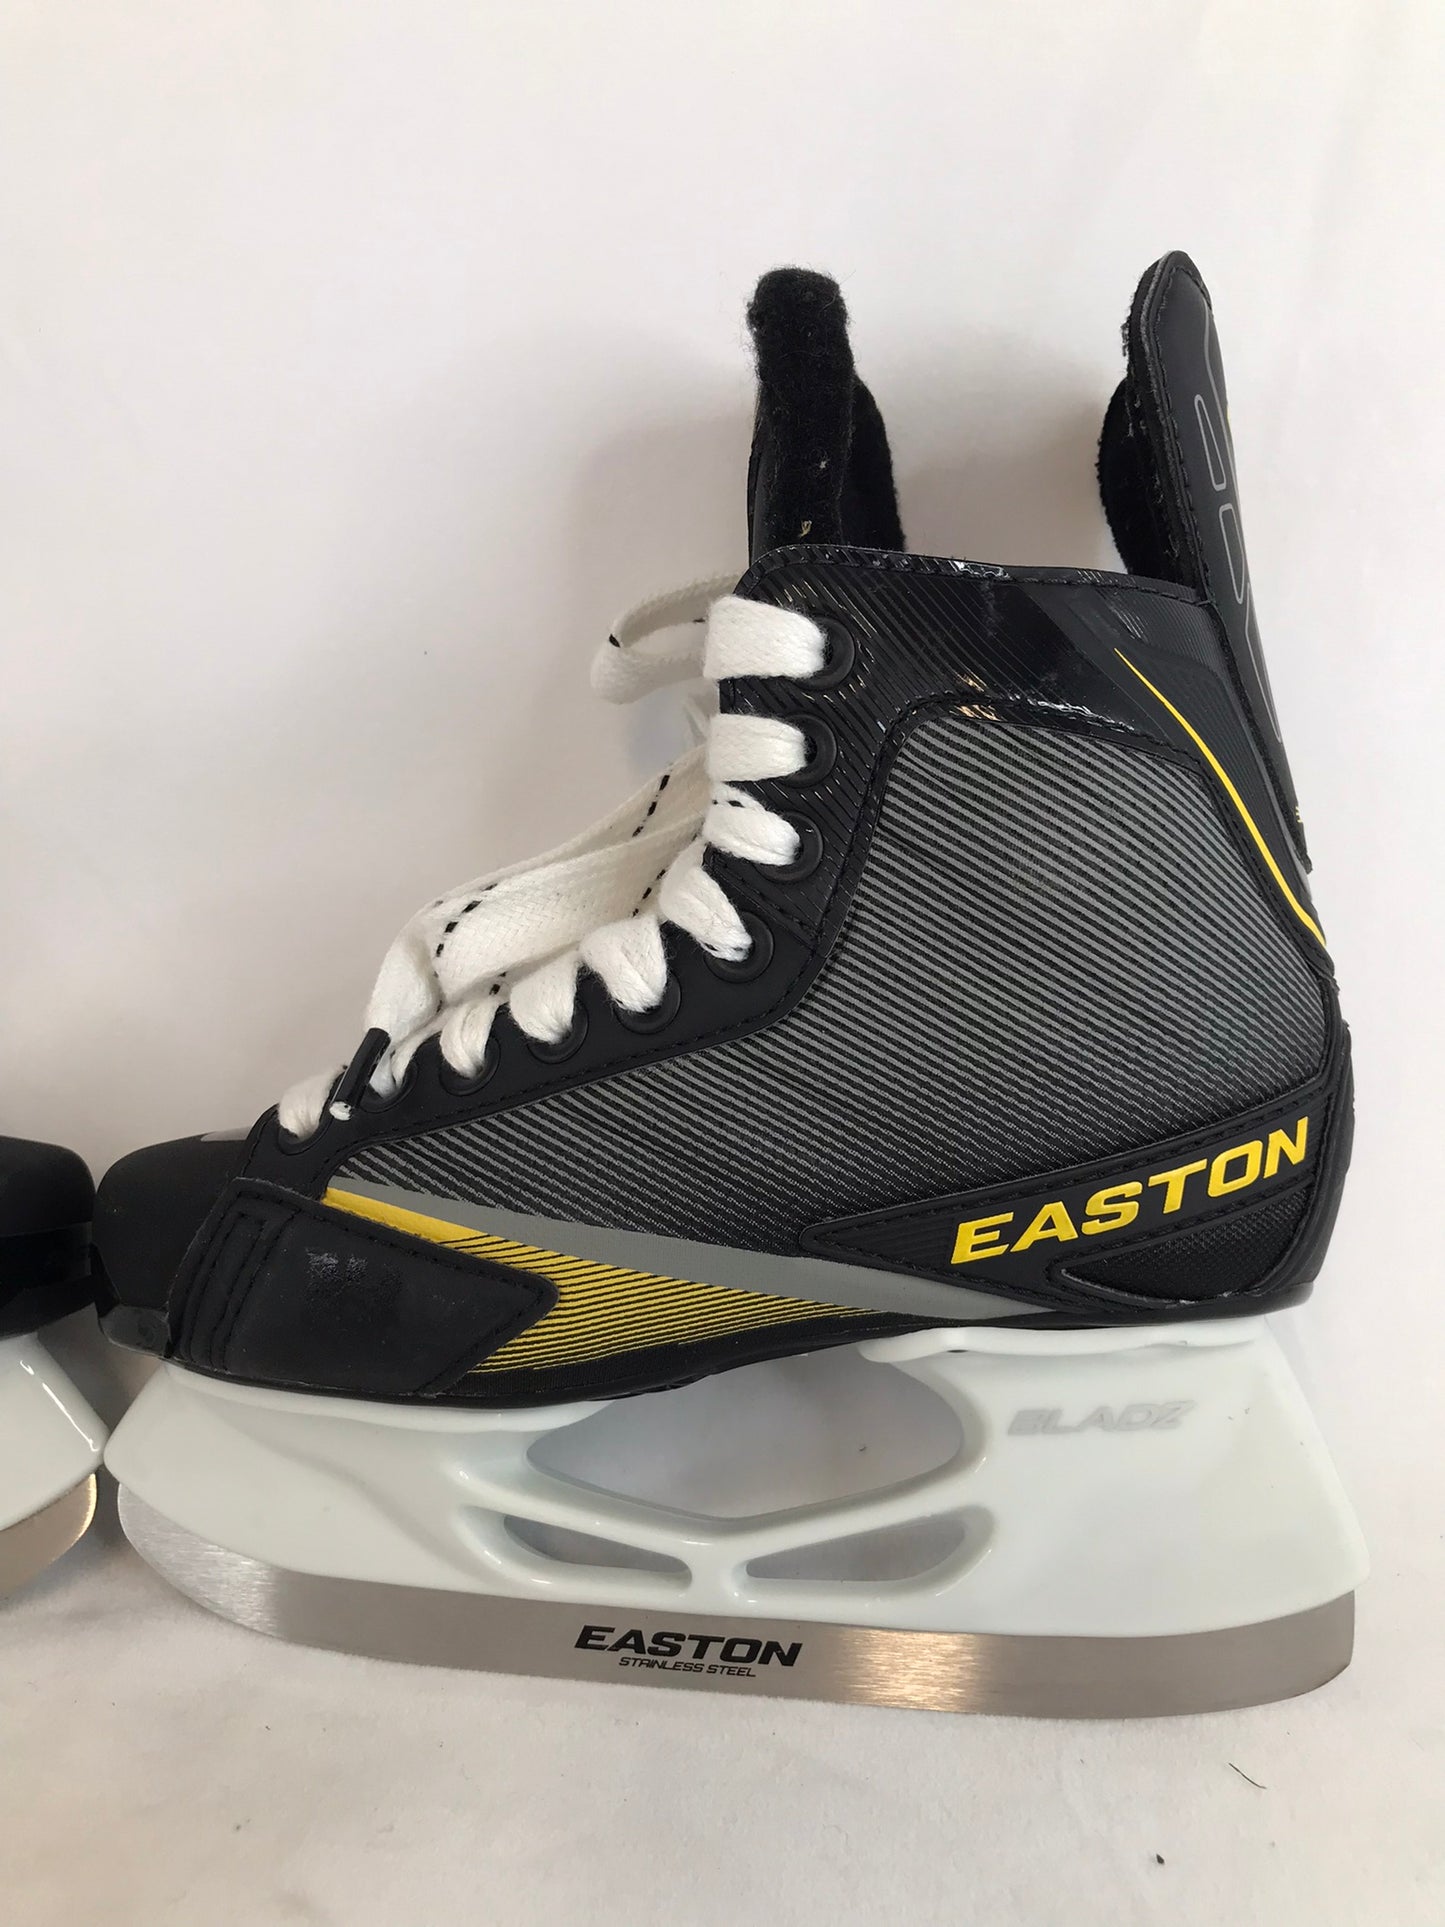 Hockey Skates Child Size 1.5 Shoe Size Easton Bladz New Demo Model